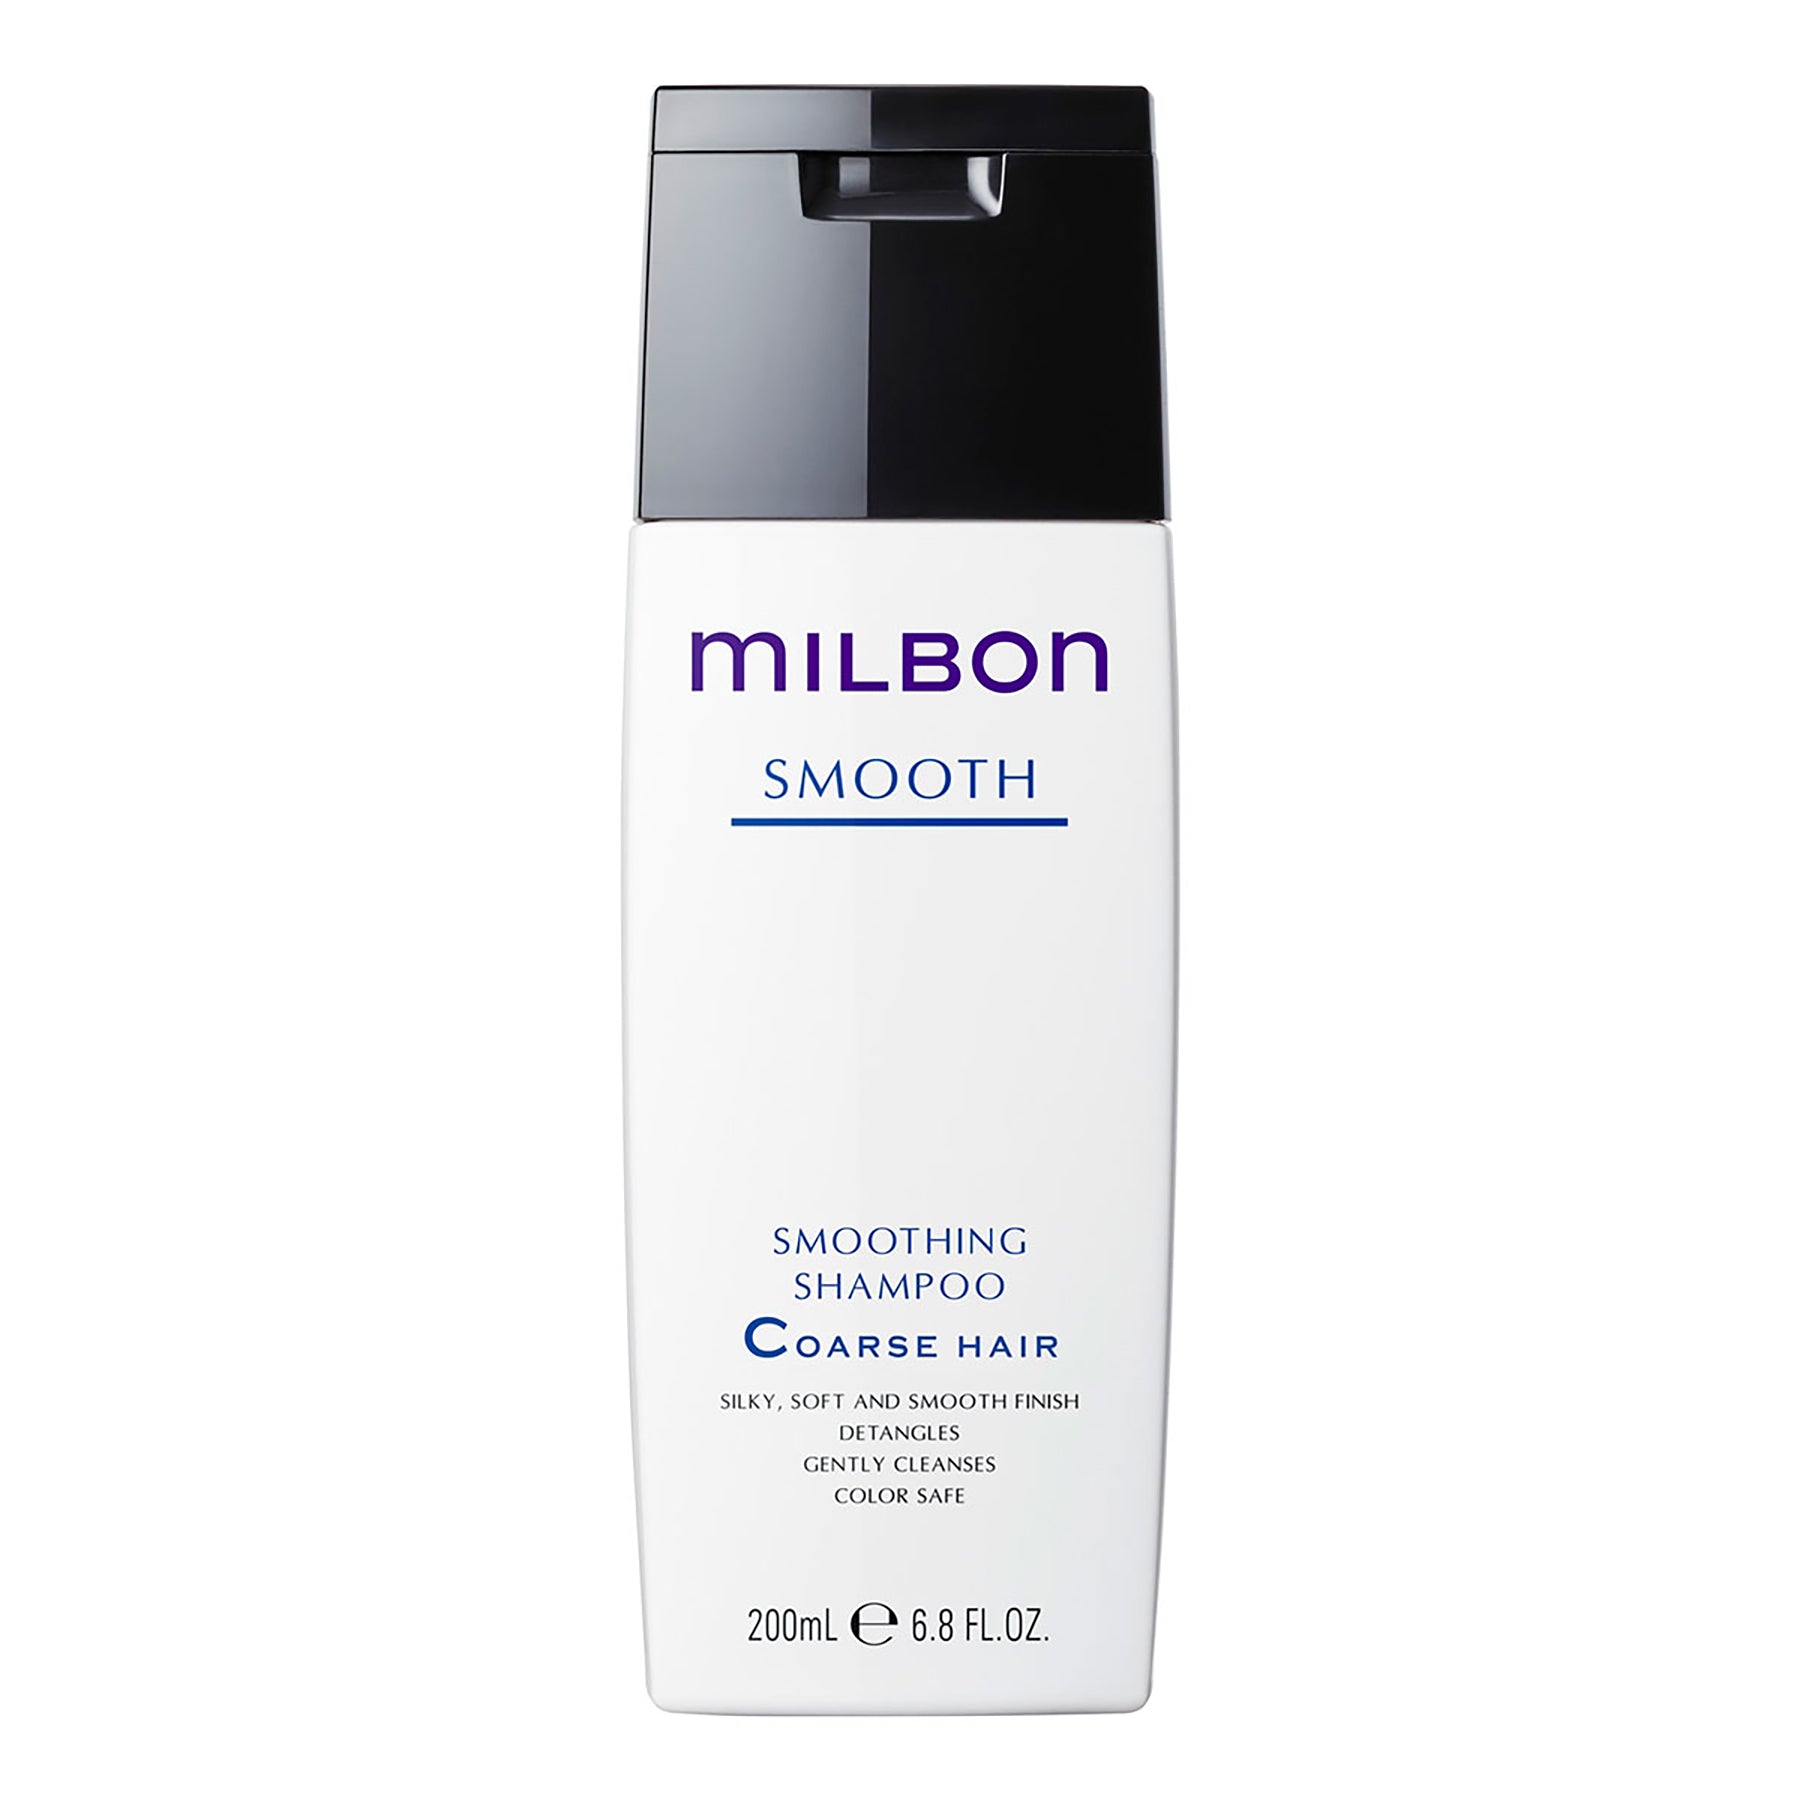 GLOBAL MILBON SMOOTH Smoothing Shampoo (Fine, Medium, Coarse